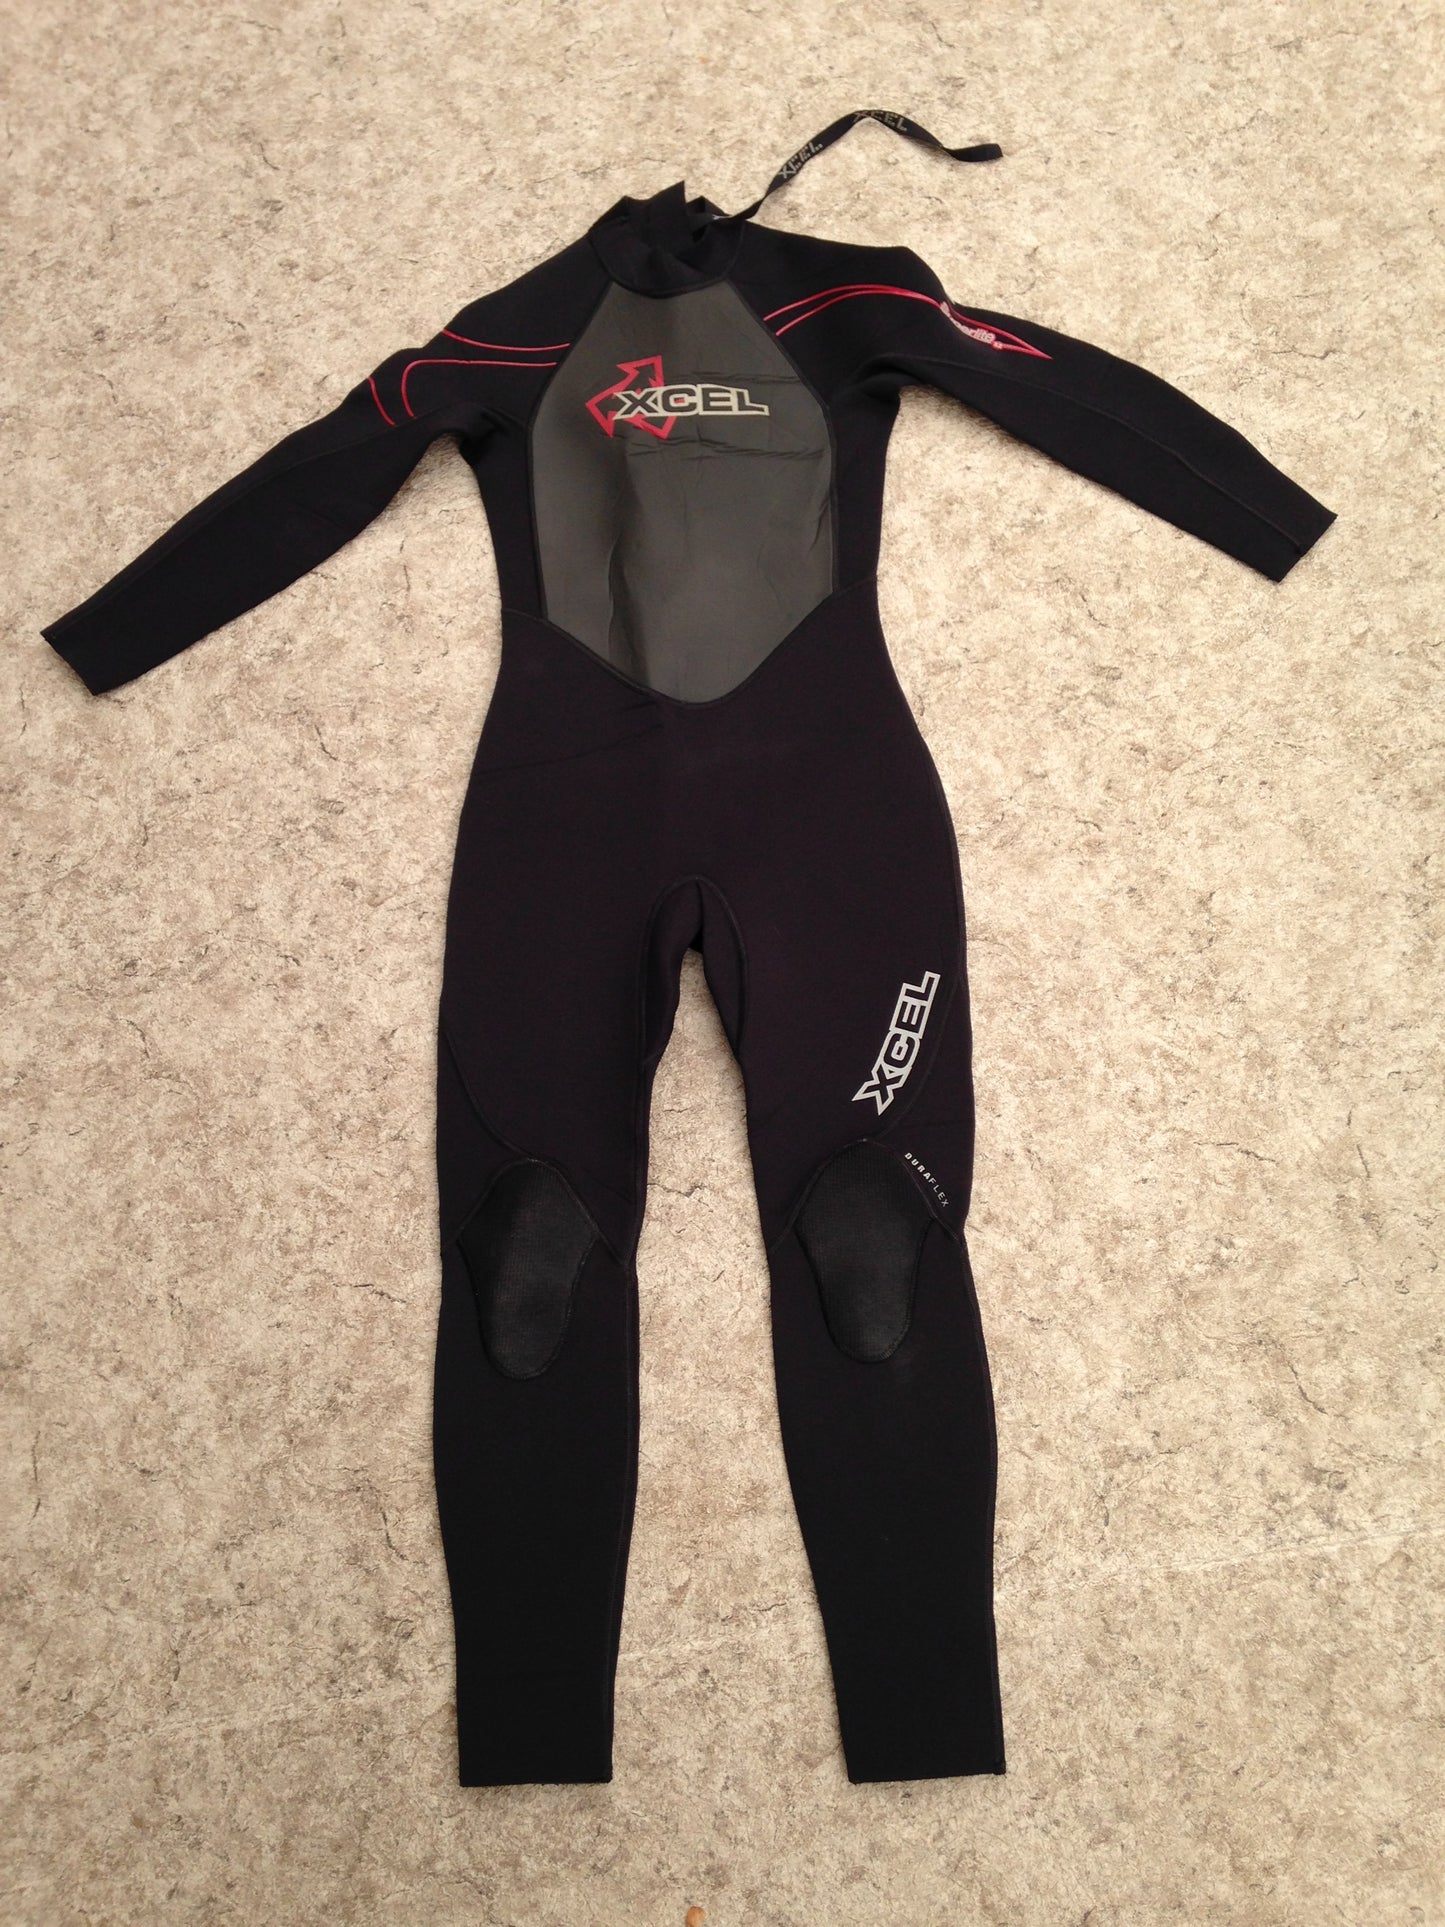 Wetsuit Child Size 12 Full Xcel Superlite Black Red Surf 3-2 mm Neoprene Surf Black Red